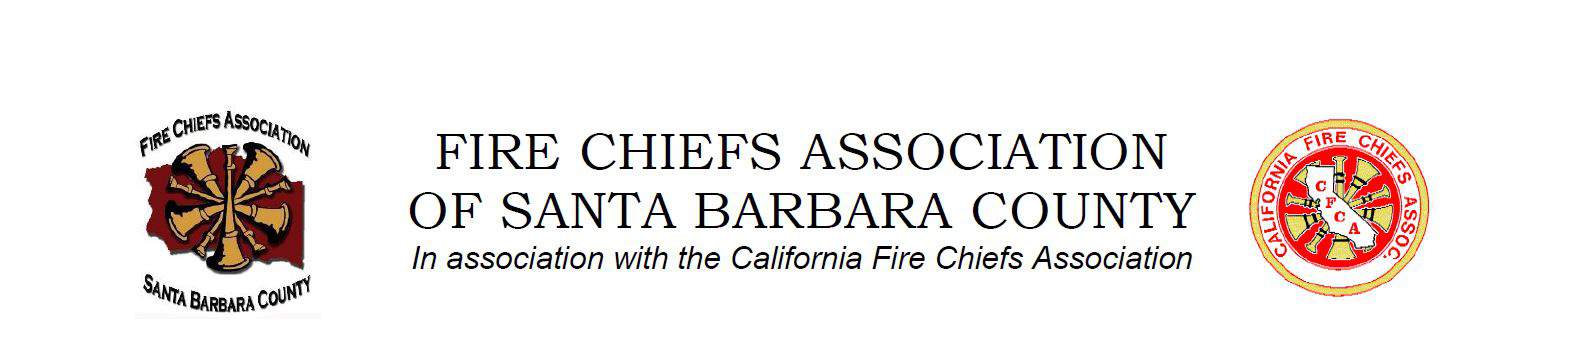 Fire Chiefs Association of Santa Barbara County banner